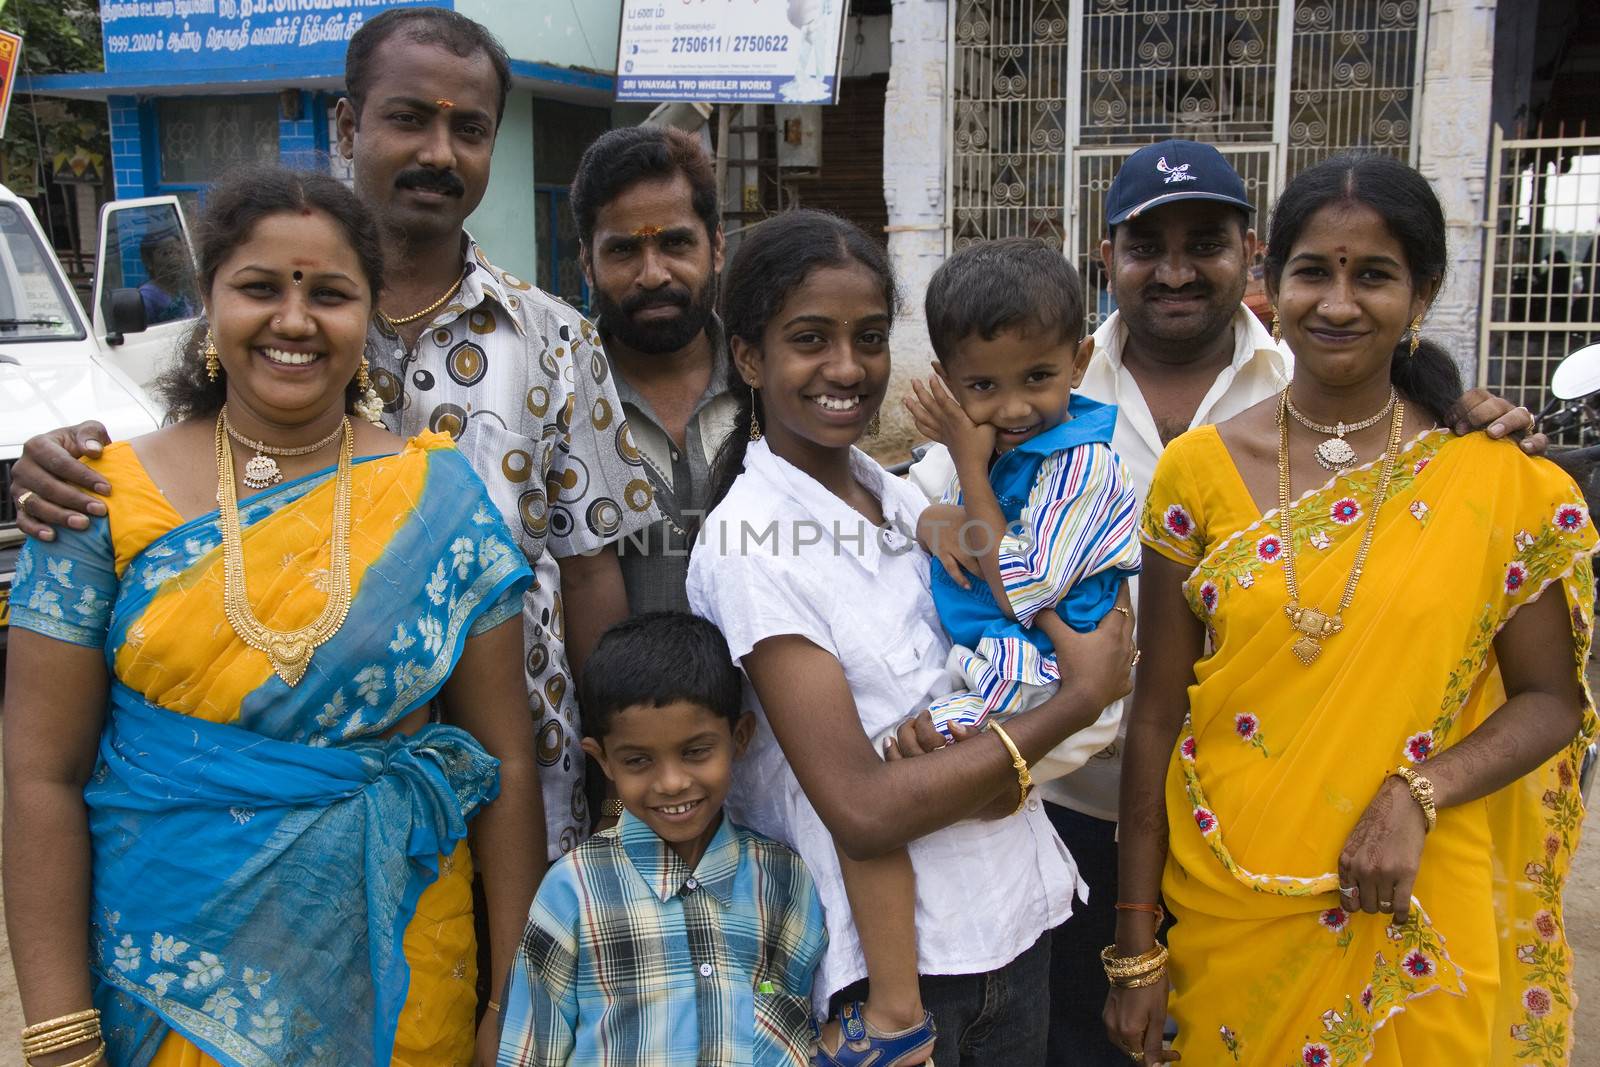 Family Group - Sri Lanka by SteveAllenPhoto